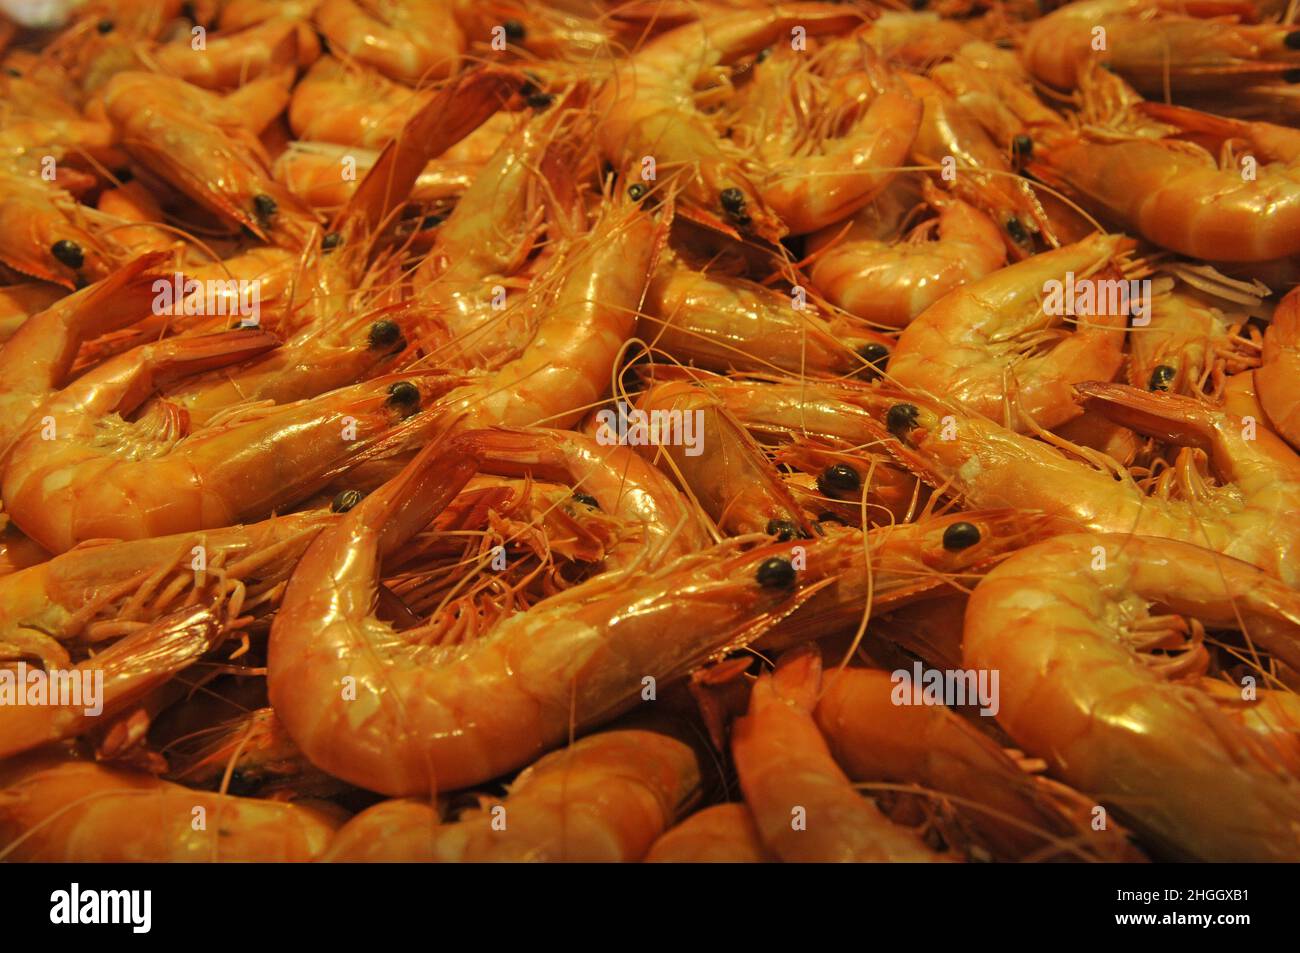 fresh king prawns on the fish market, Australia Stock Photo